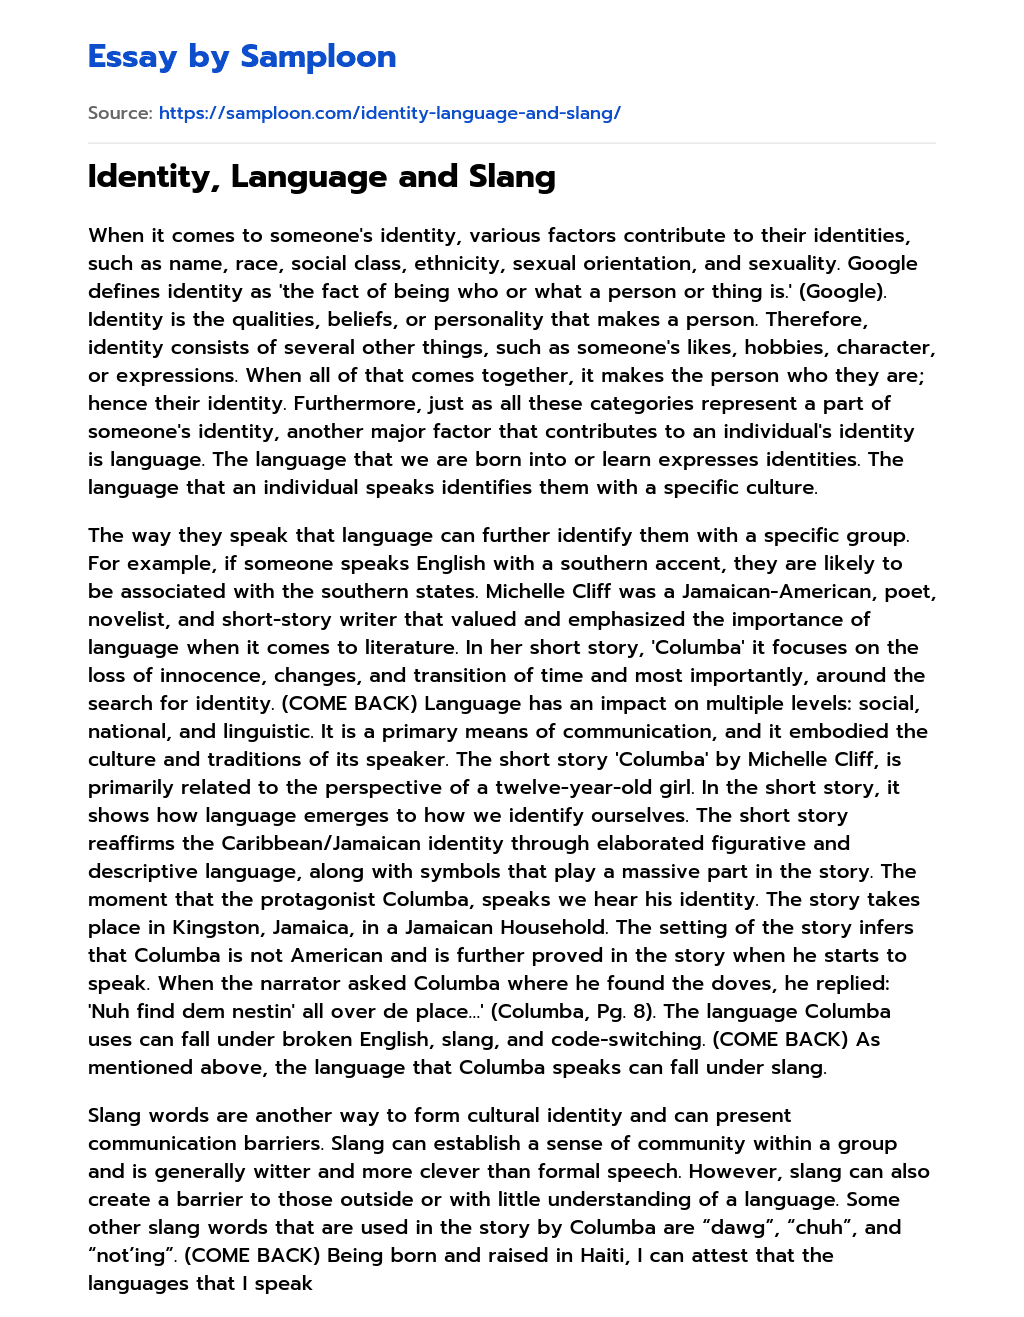 Identity, Language and Slang essay